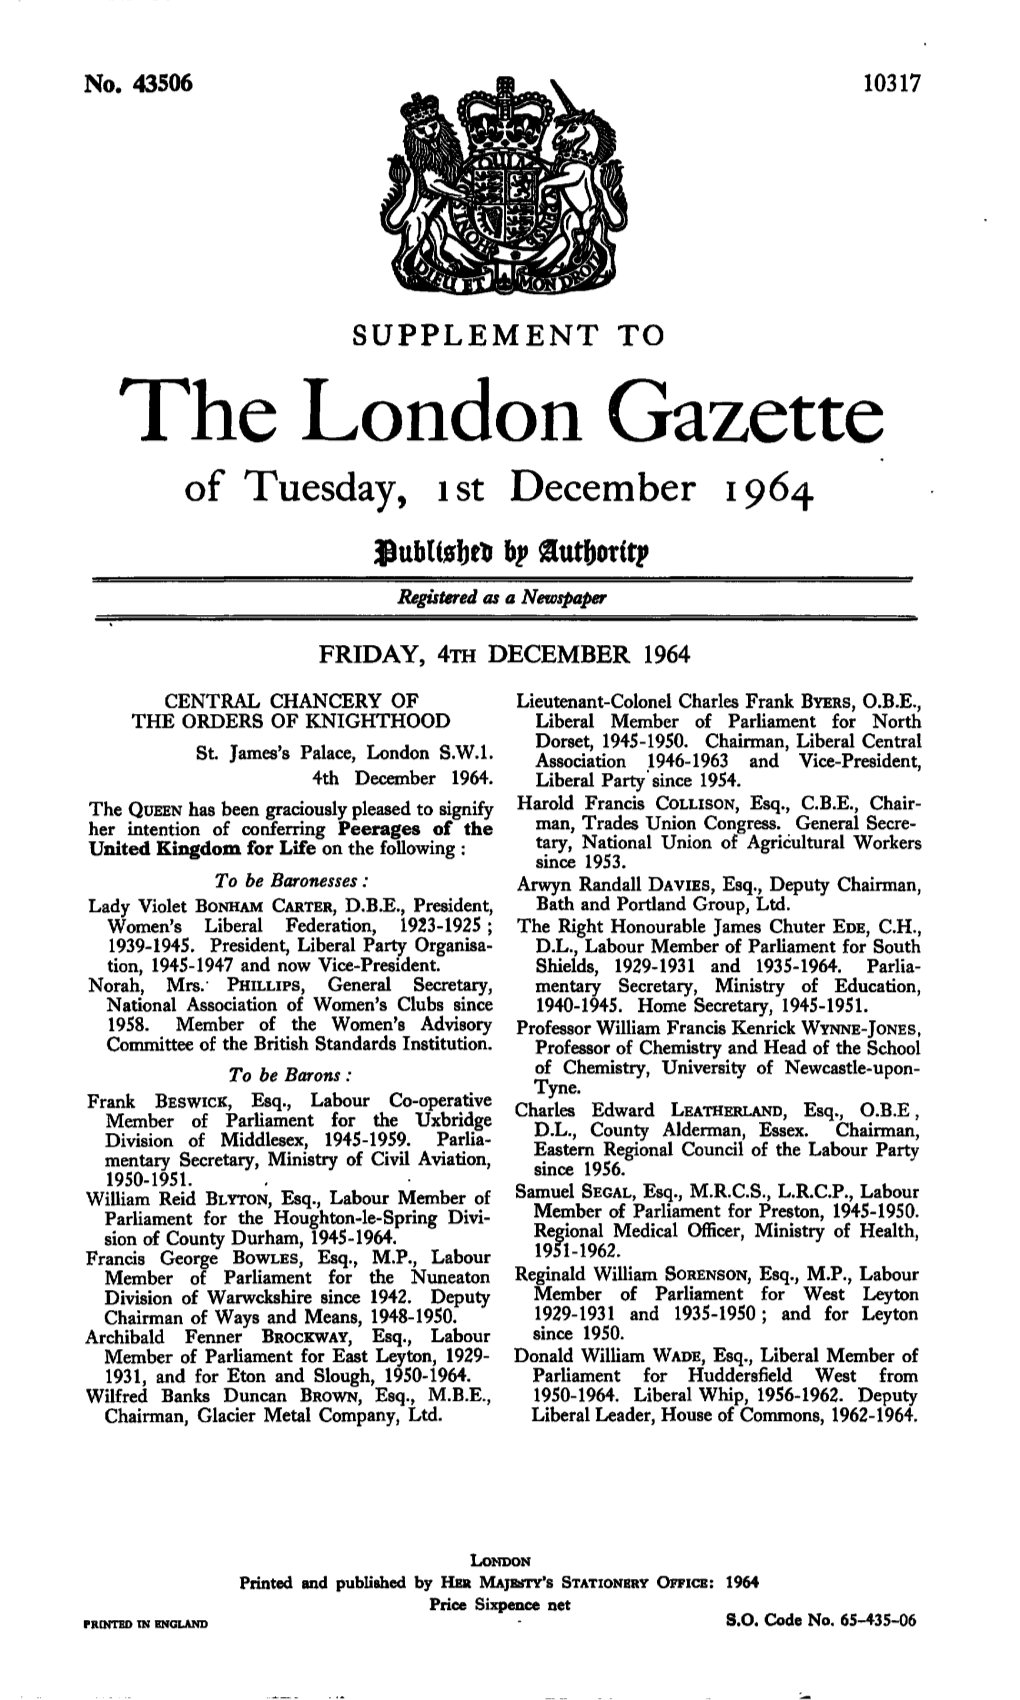 The London Gazette of Tuesday, Ist December 1964